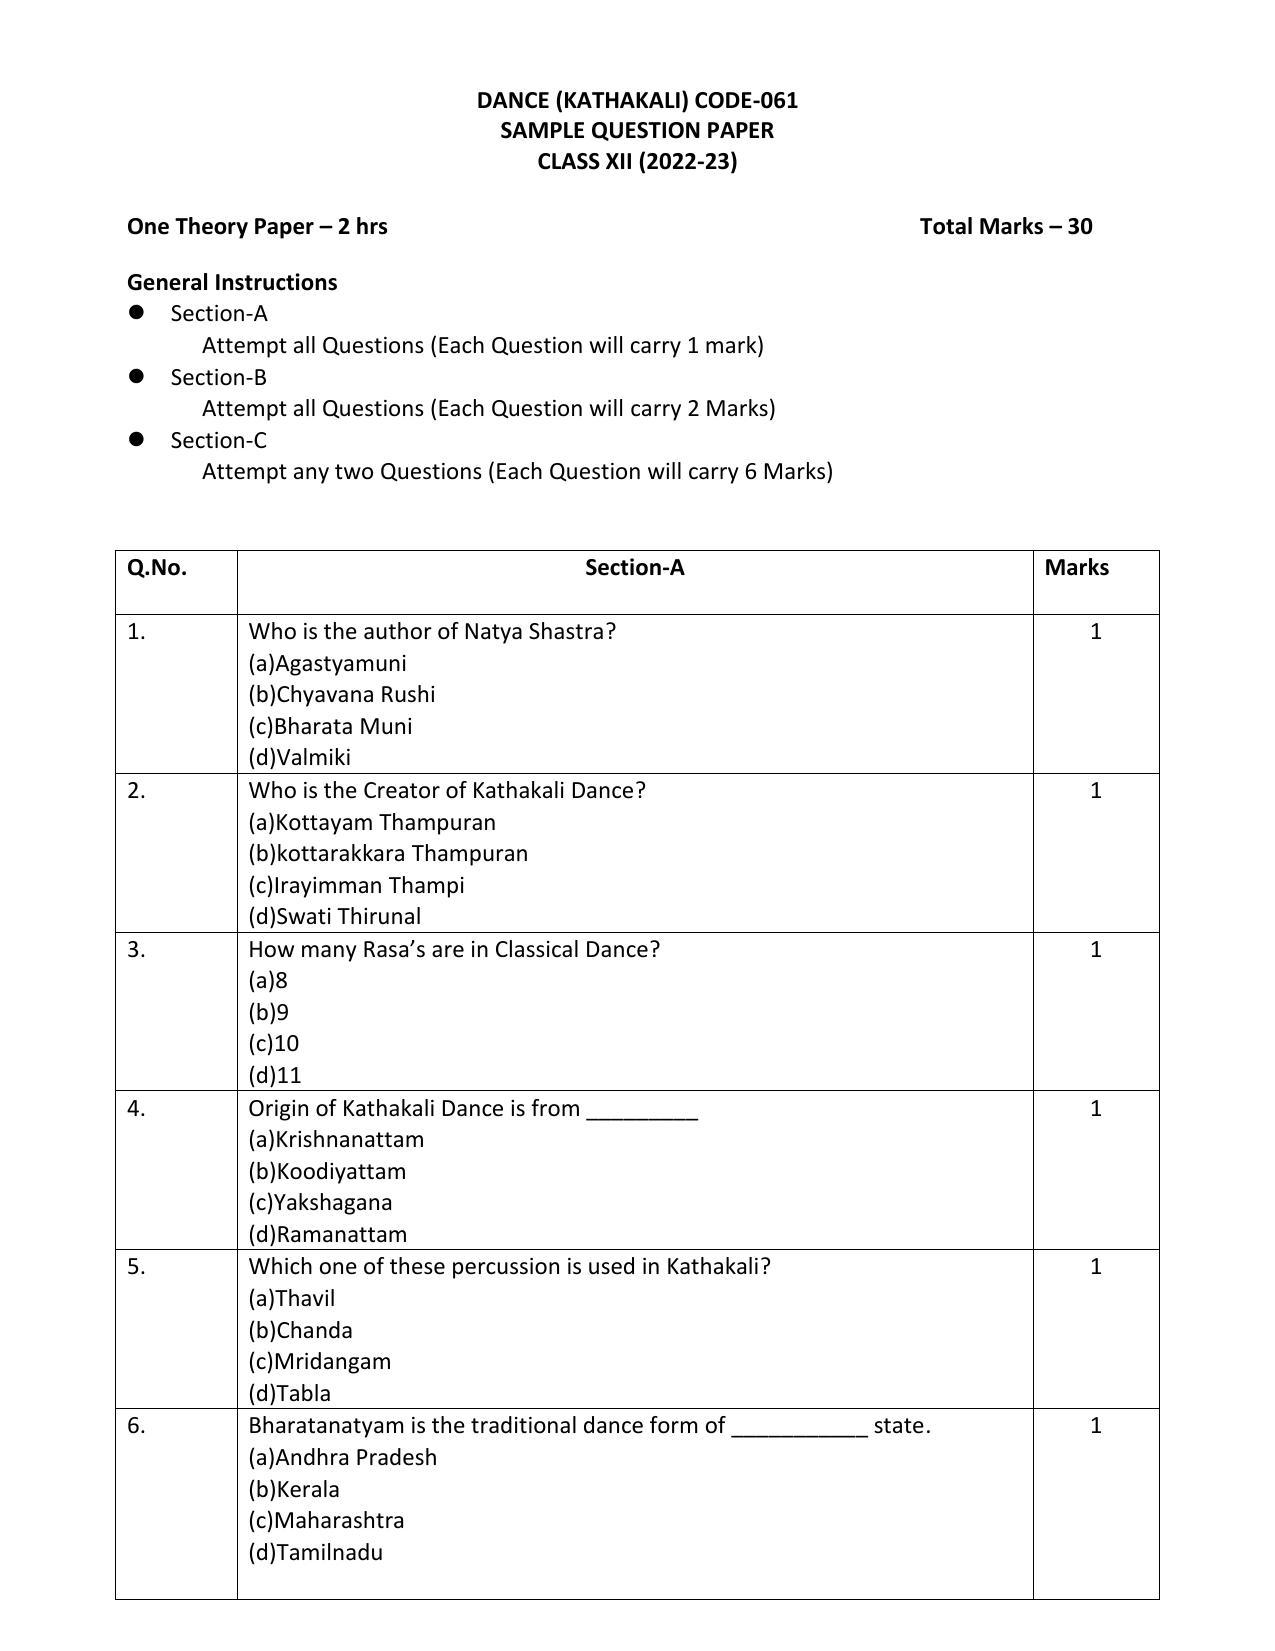 CBSE Class 12 Kathakali Sample Paper 2023 - Page 1